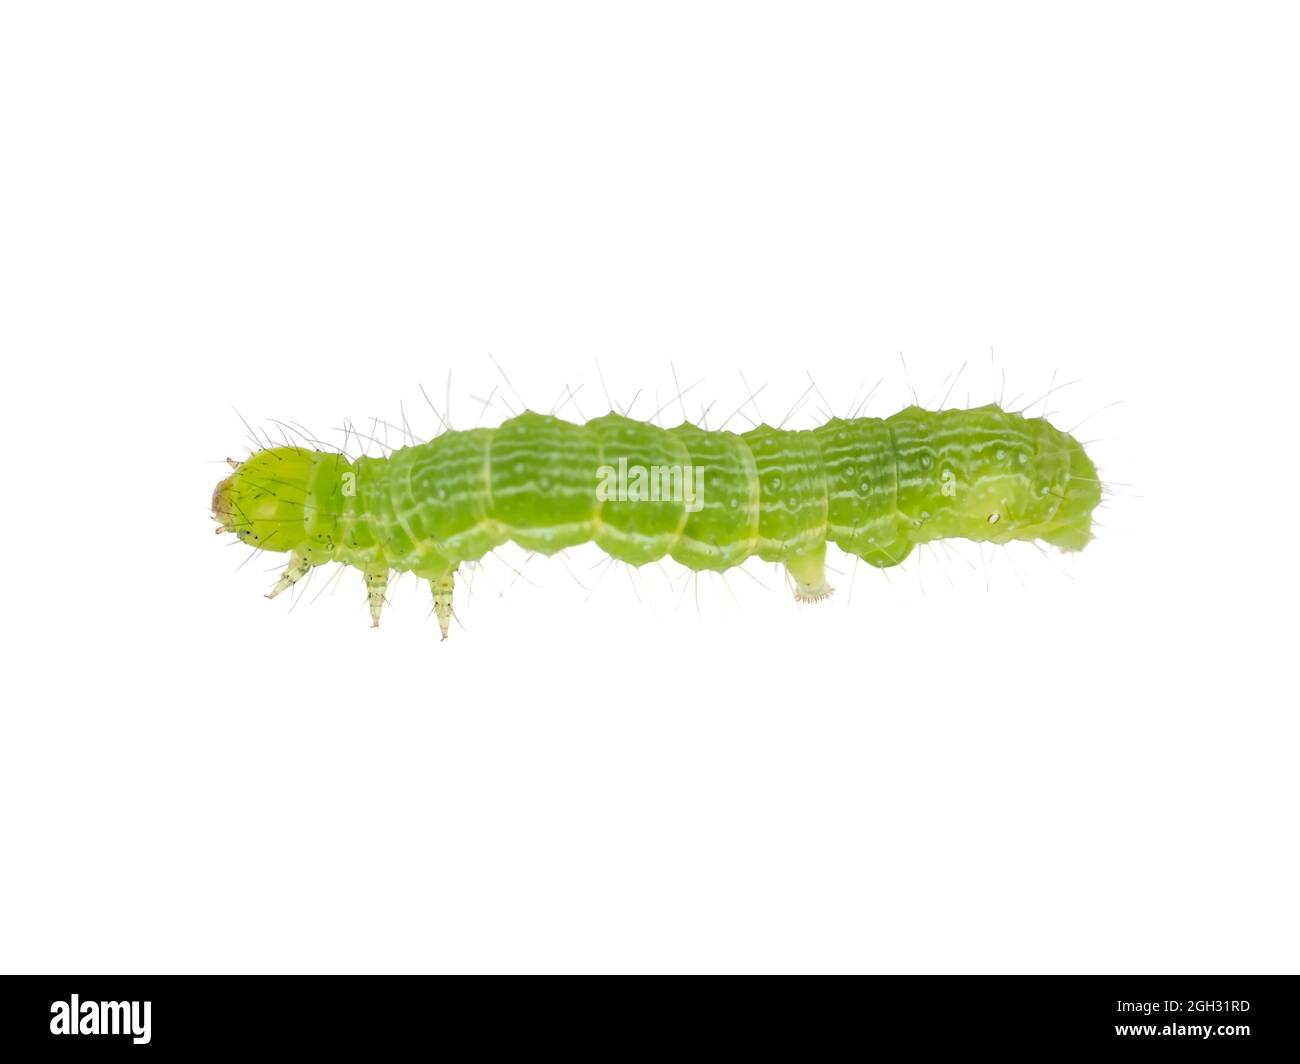 Garden pest small green caterpillar, probably Trichoplusia ni (cabbage looper) Stock Photo